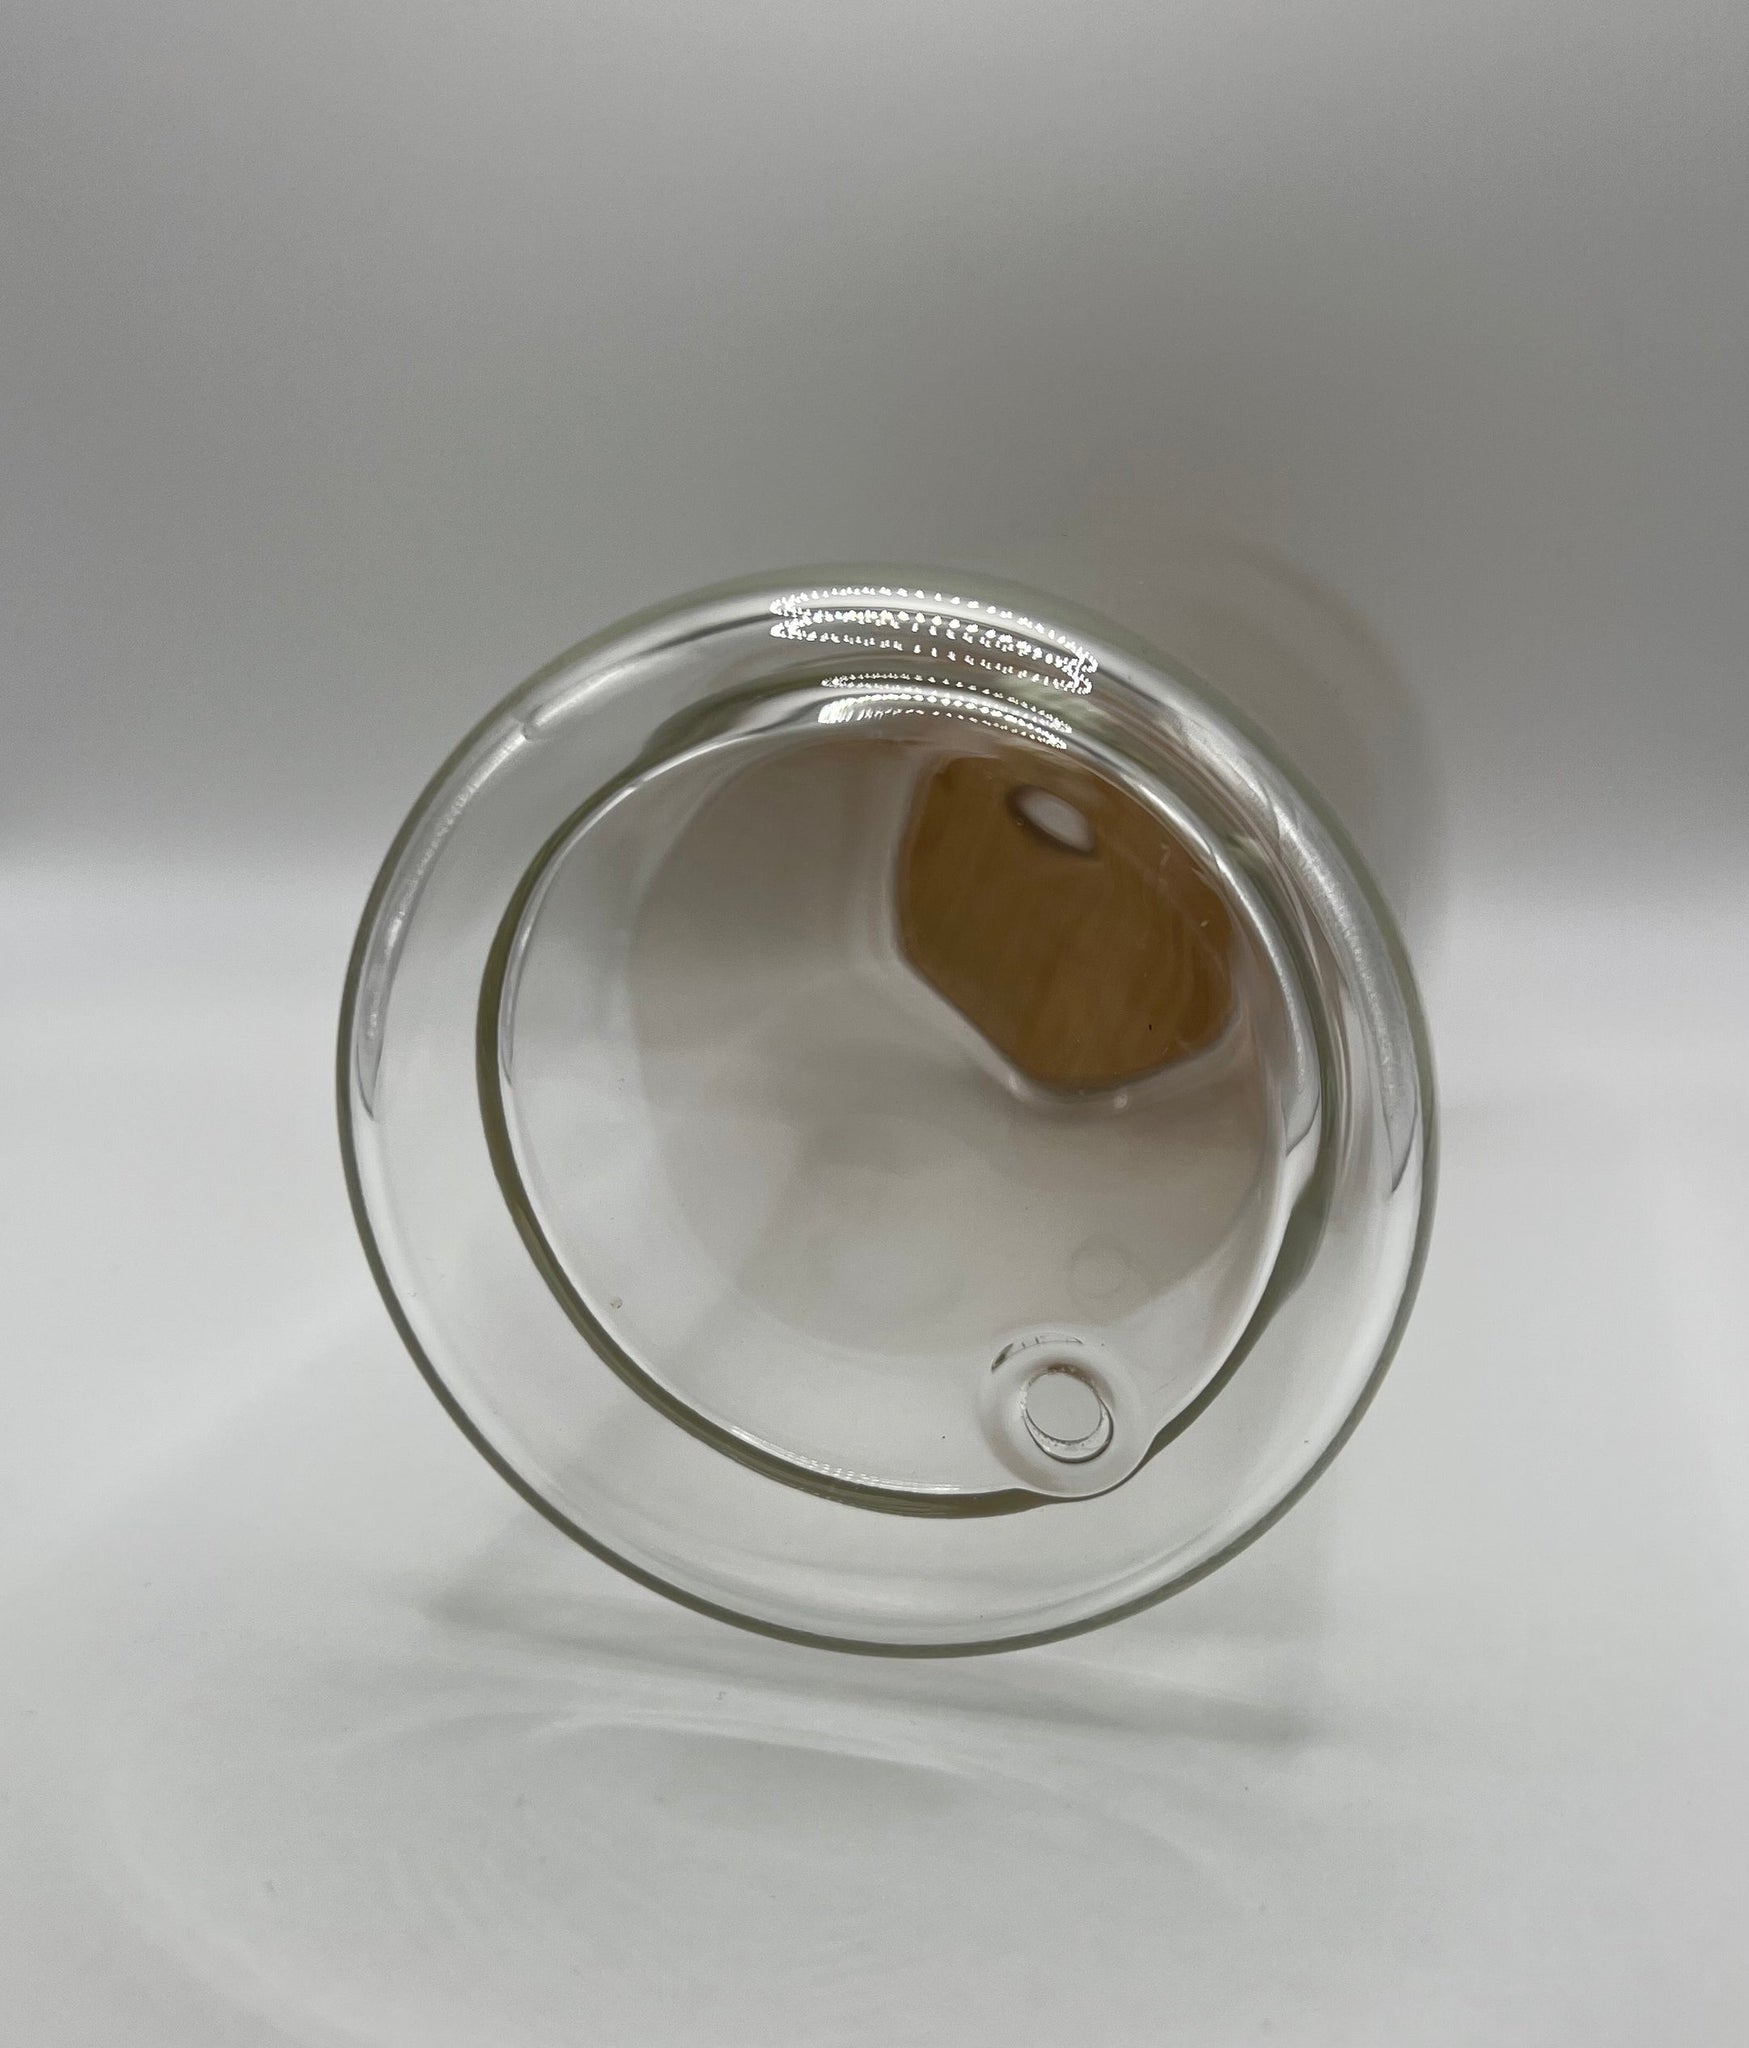 20oz Snowglobe Sublimation Glass Can – Krafty Cups 4 U